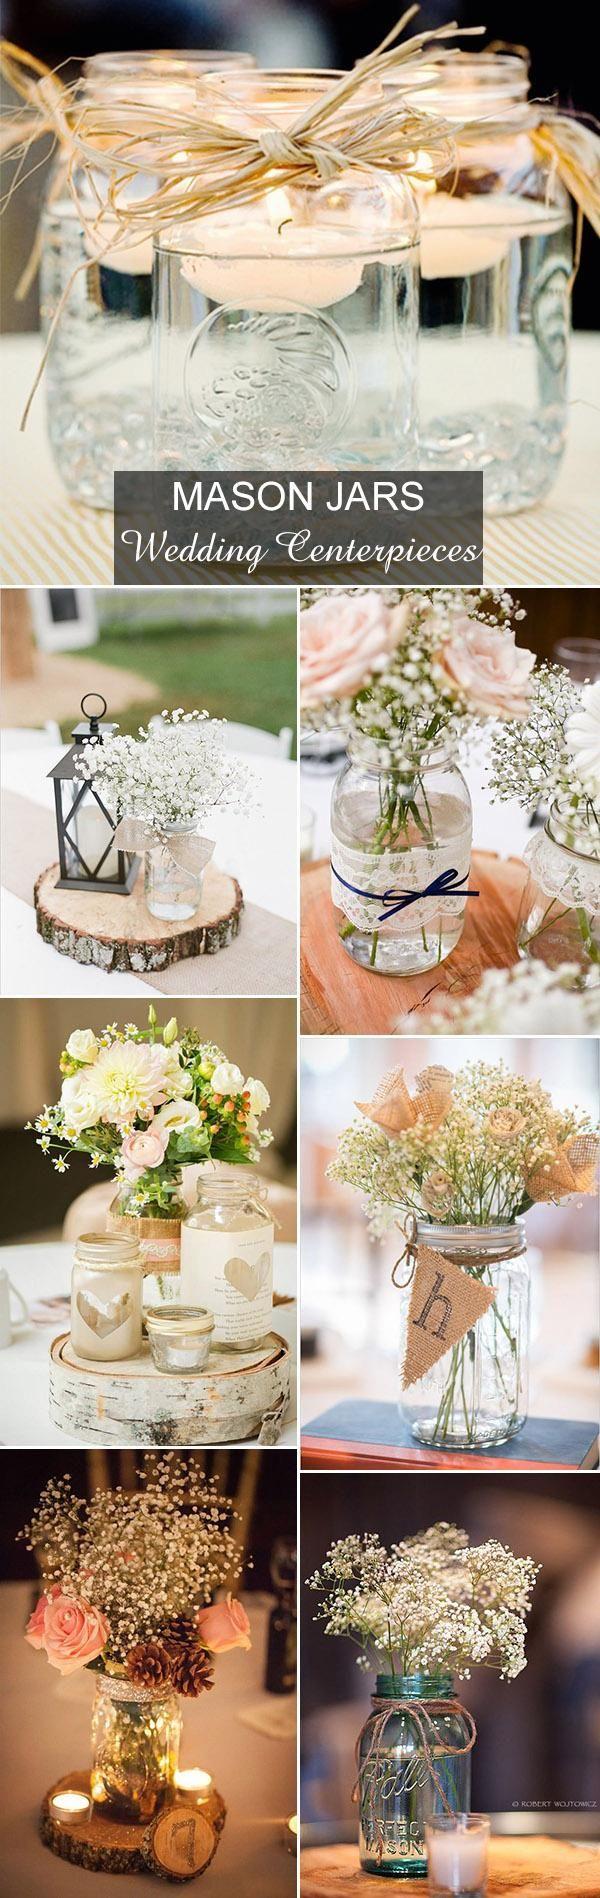 Wedding - Country Rustic Mason Jars Inspired Wedding Centerpieces Ideas